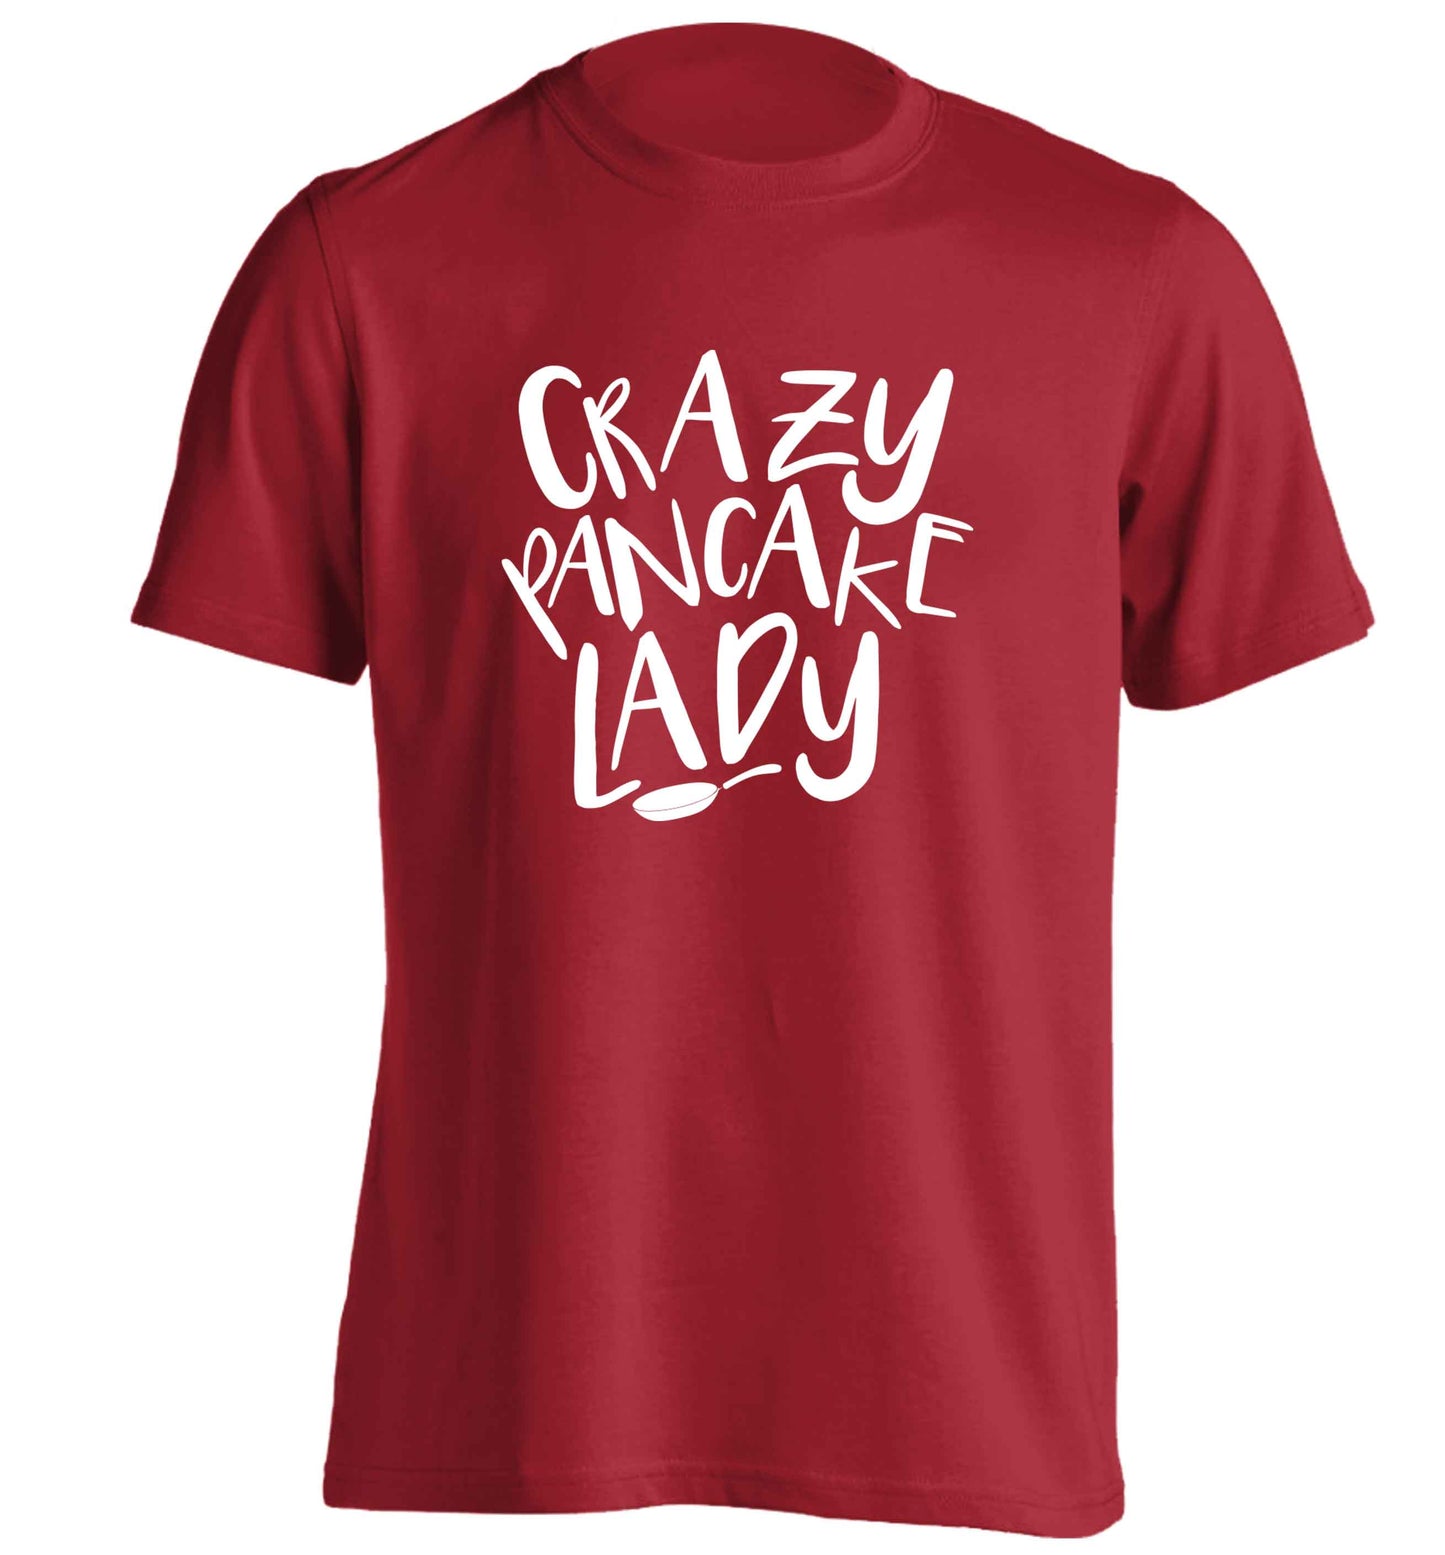 Crazy pancake lady adults unisex red Tshirt 2XL